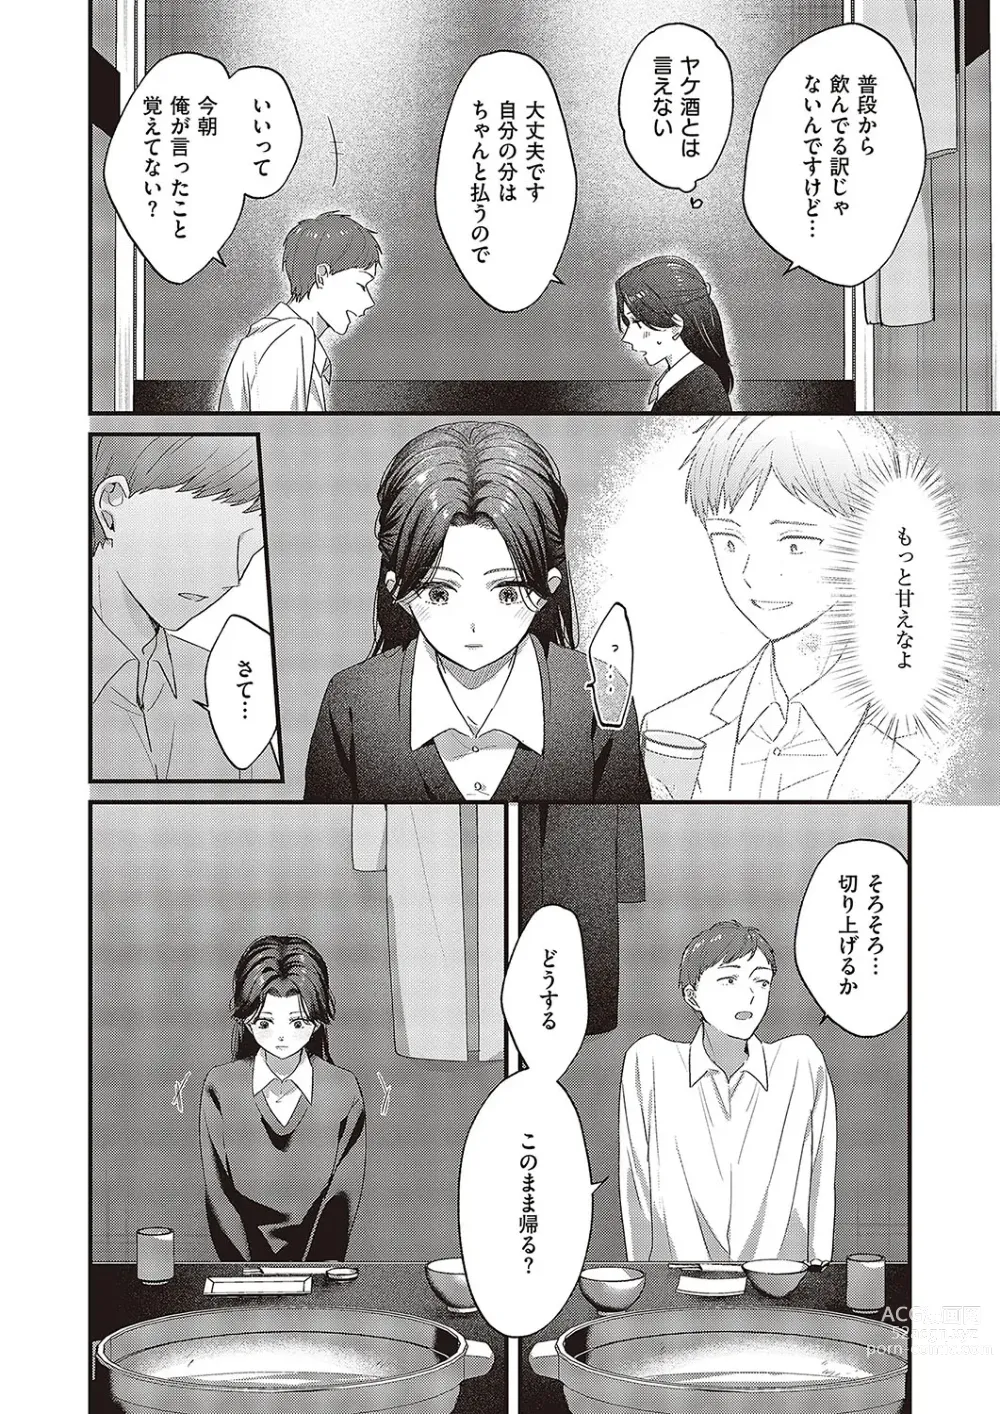 Page 645 of manga Comic G-Es Vol. 5